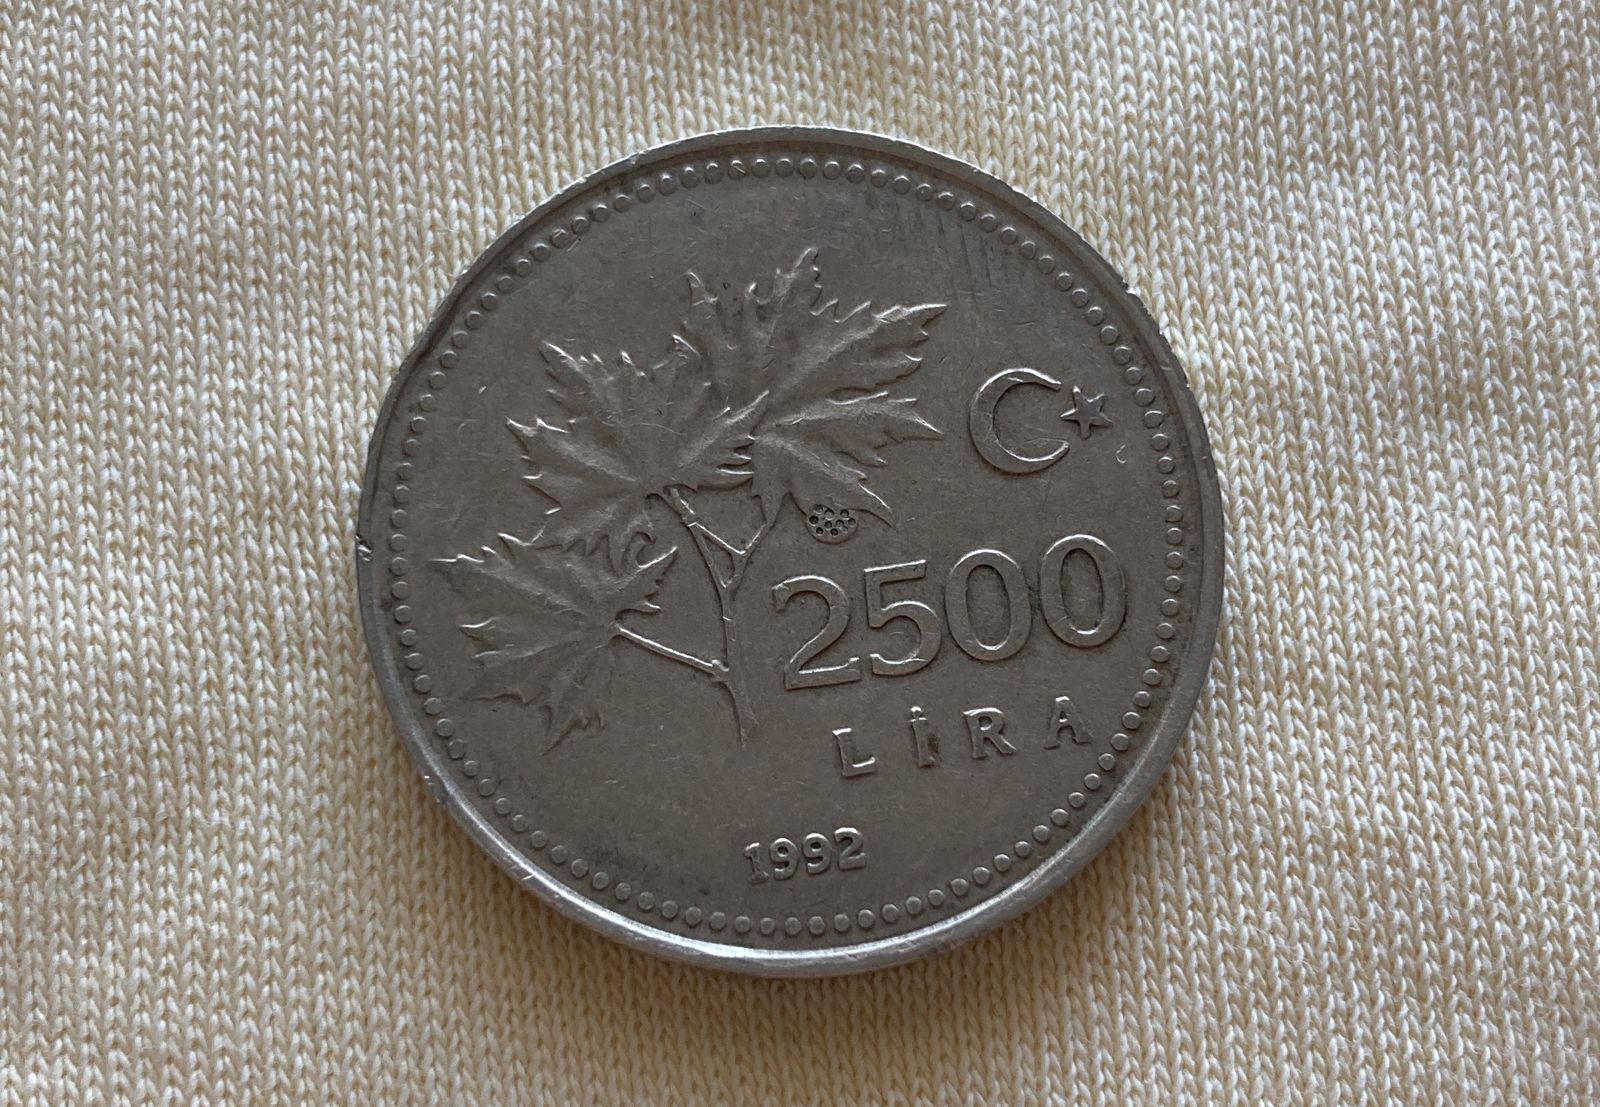 1992 Madeni Para 2500 Lira